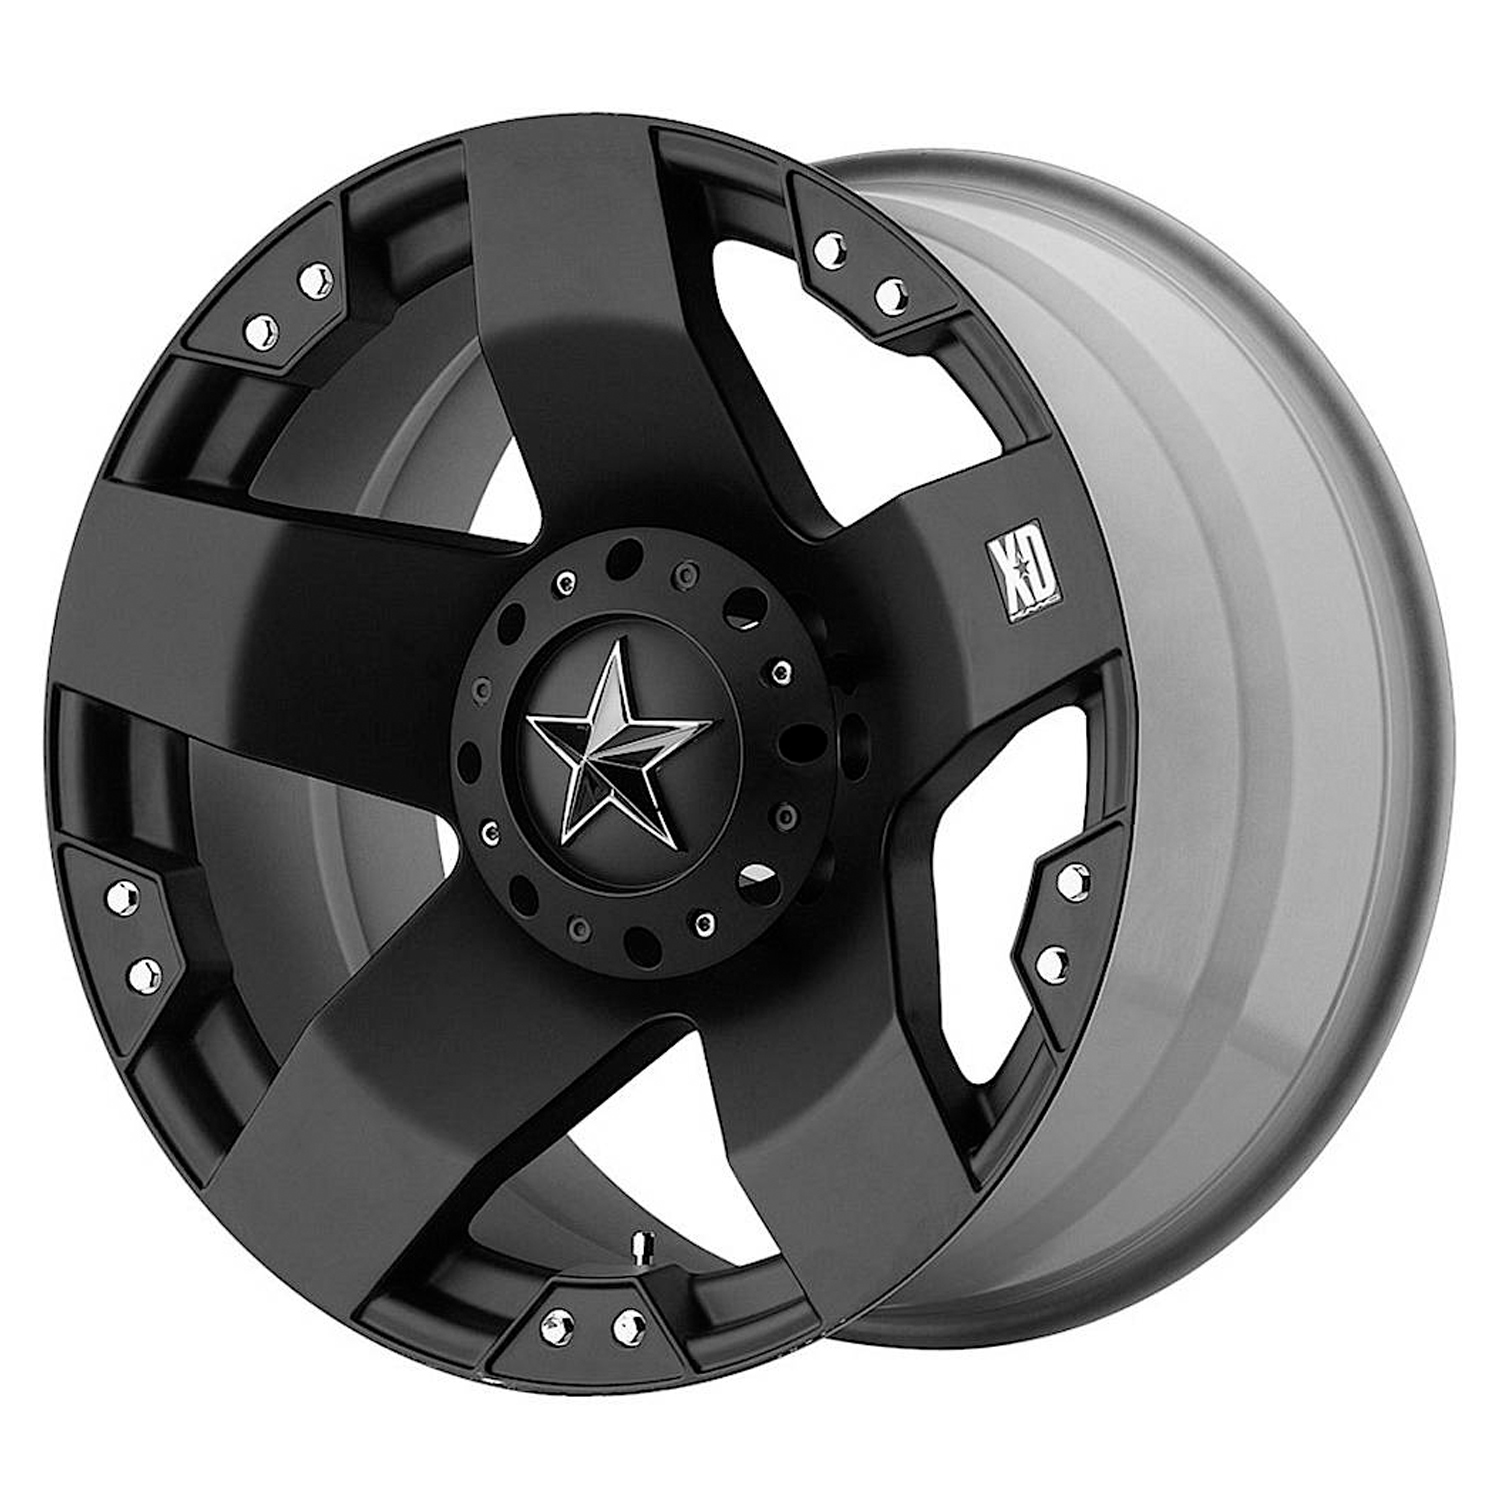 Xd Series Rockstar 17x8 6x135/6x139.7 10et Matte Black wheel